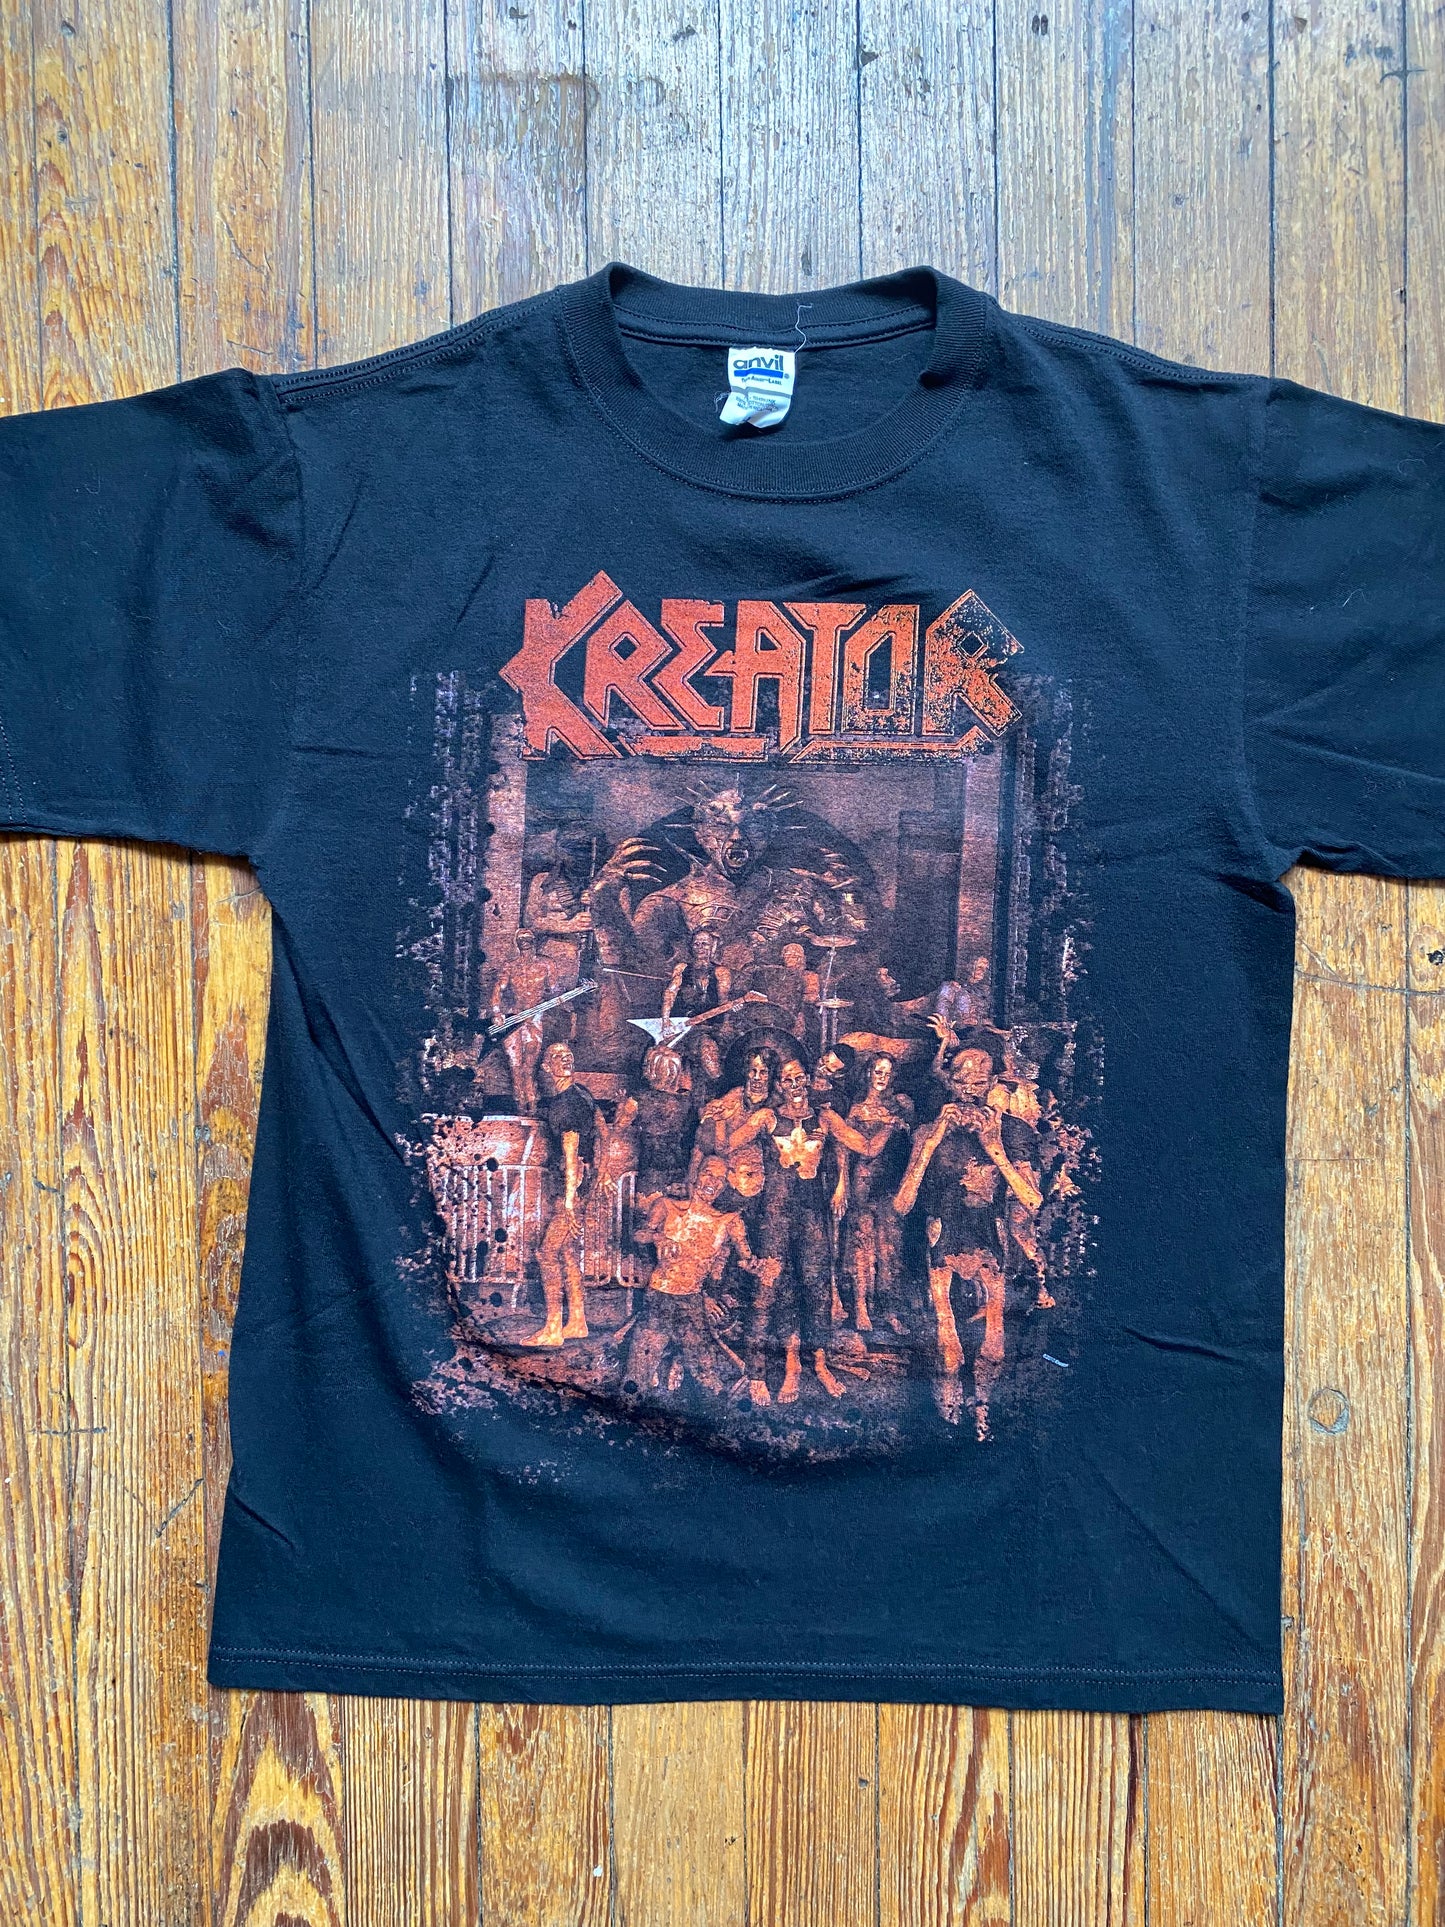 Kreator “Hordes of Chaos Part II” 2010 Tour Shirt